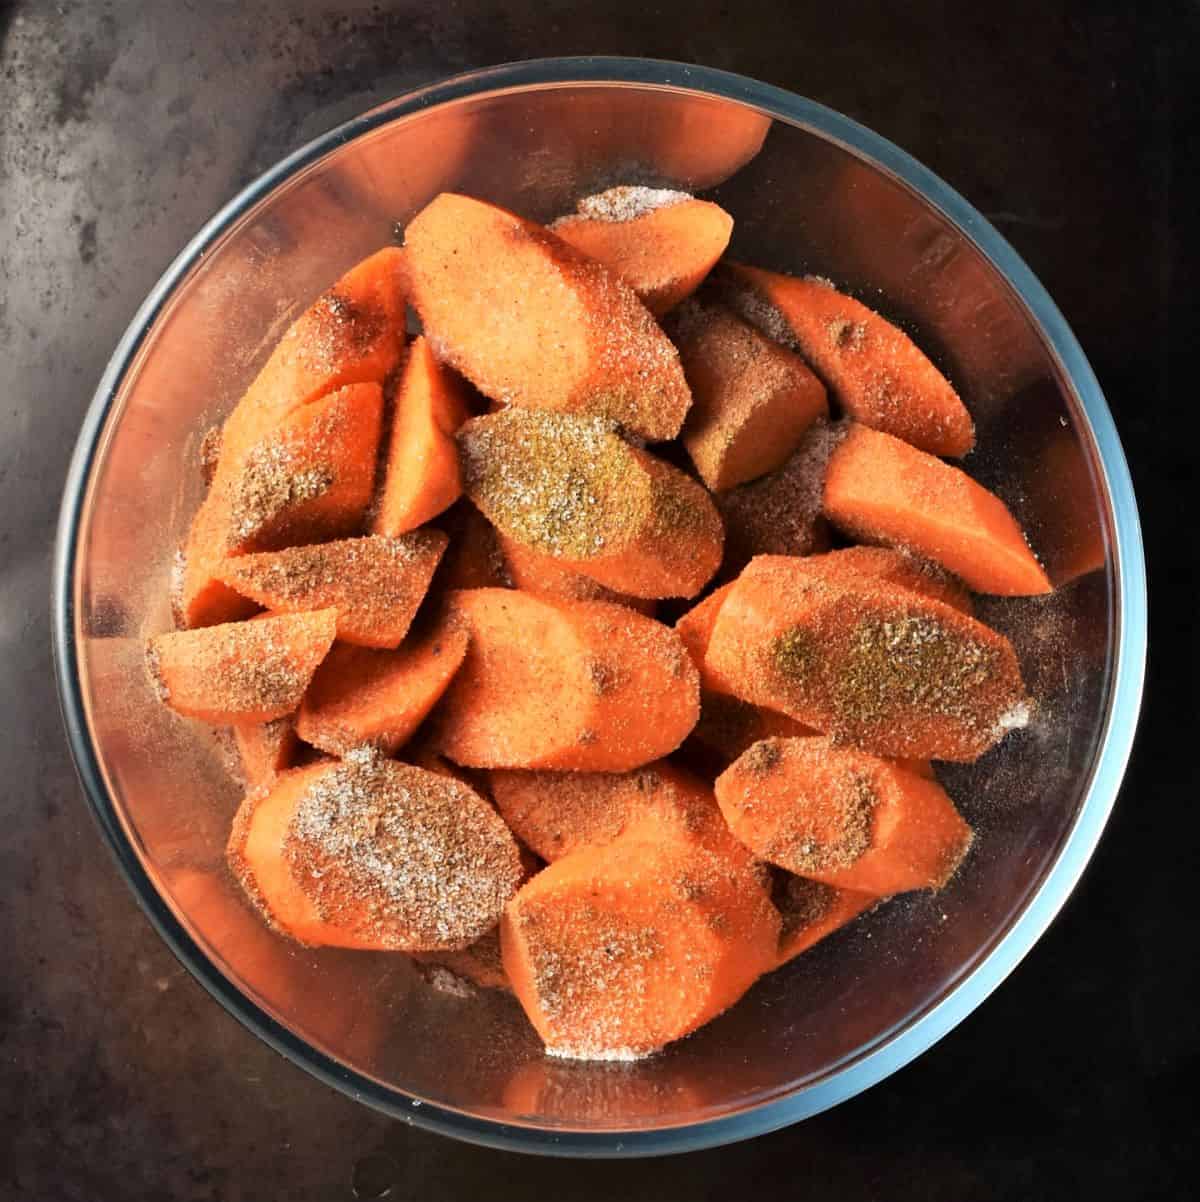 Sliced carrots with spice inside blender.